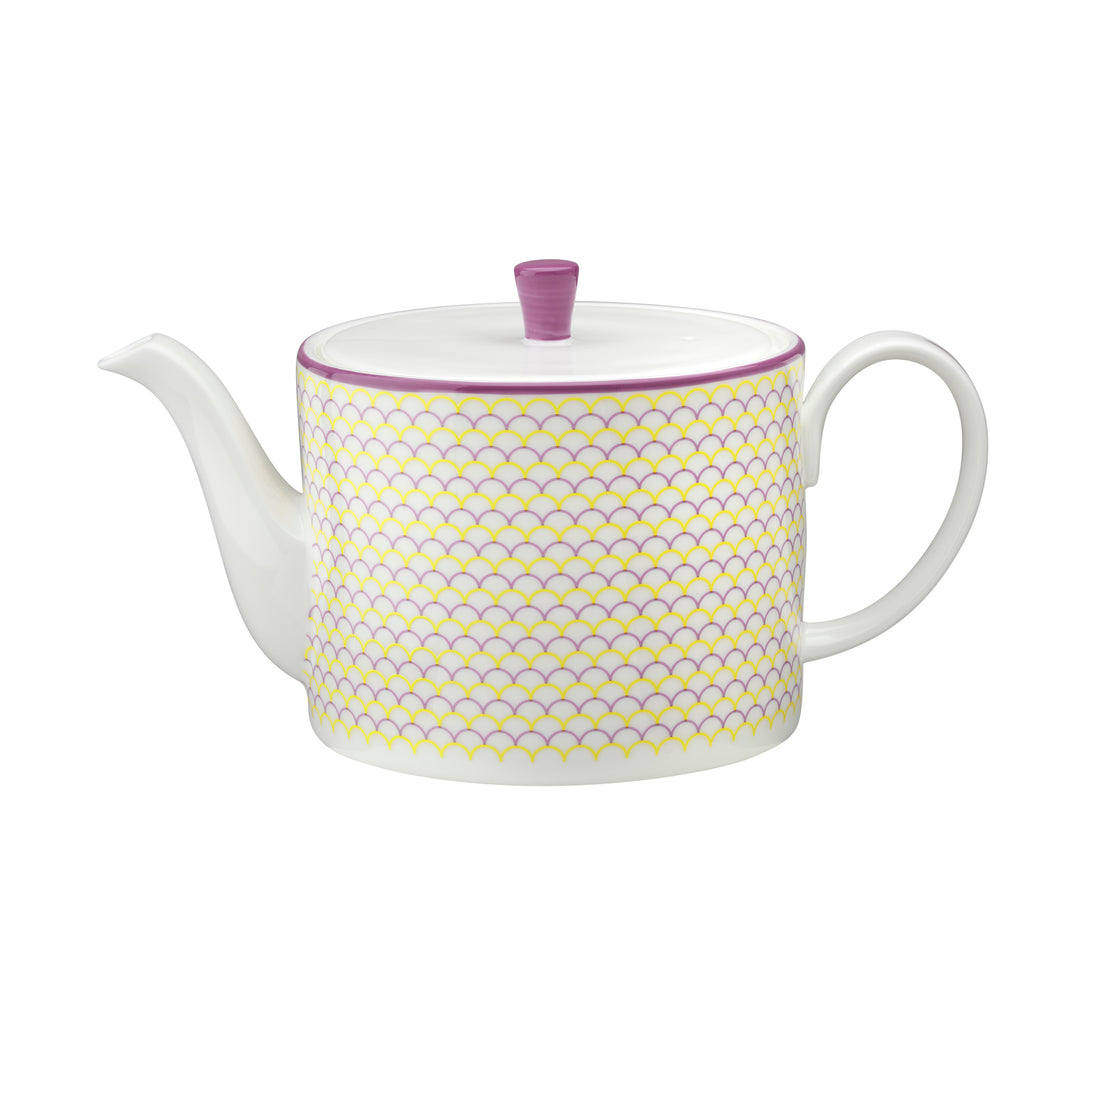 Ripple Teapot in Pink & Yellow - 1L